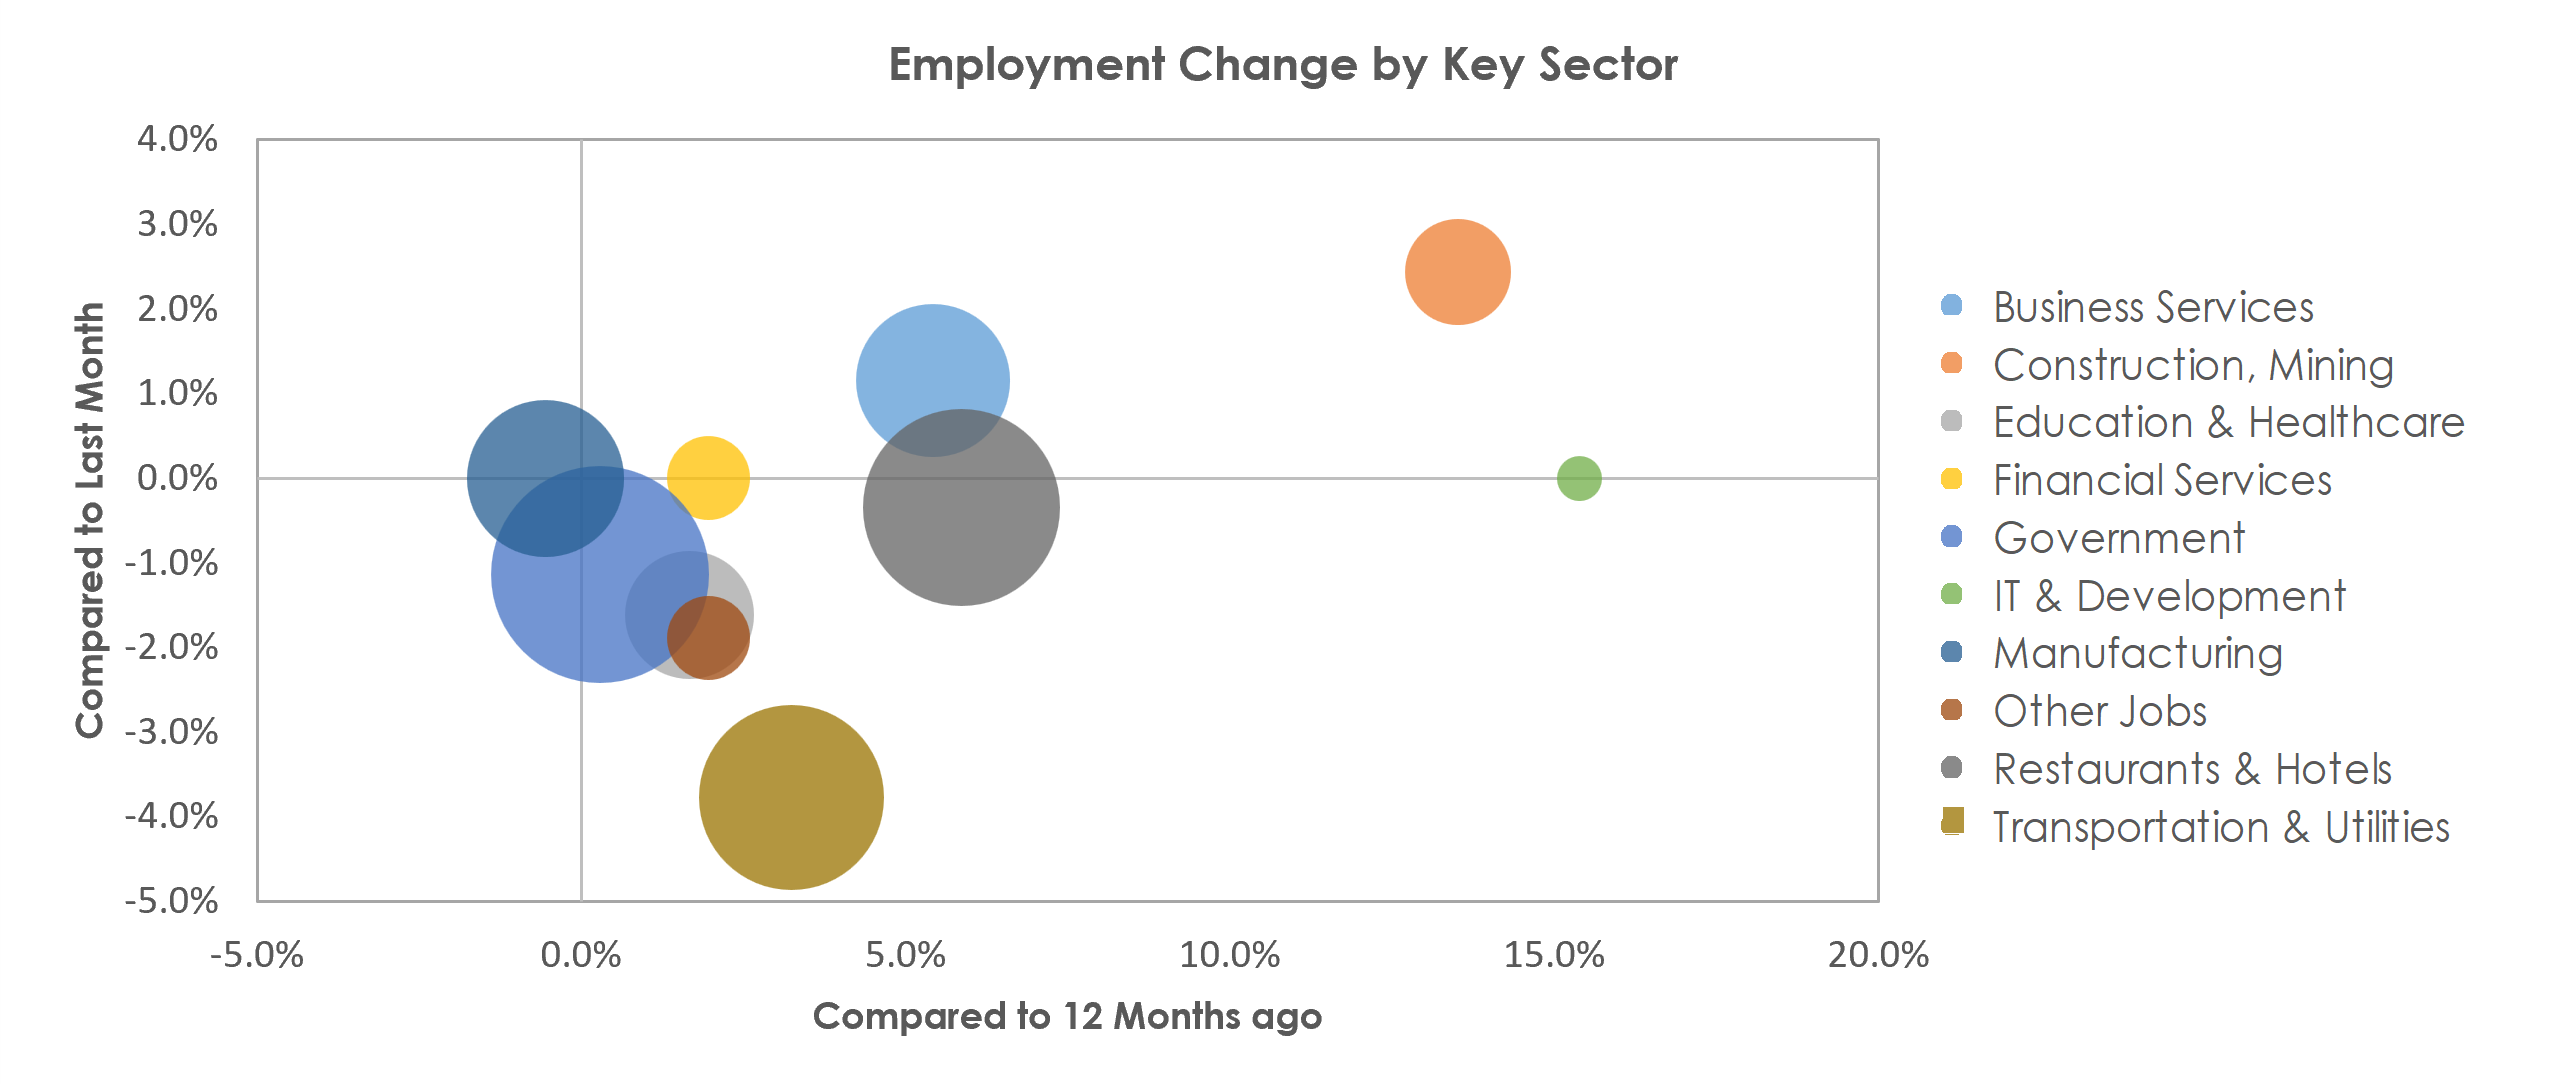 Gulfport-Biloxi-Pascagoula, MS Unemployment by Industry January 2022